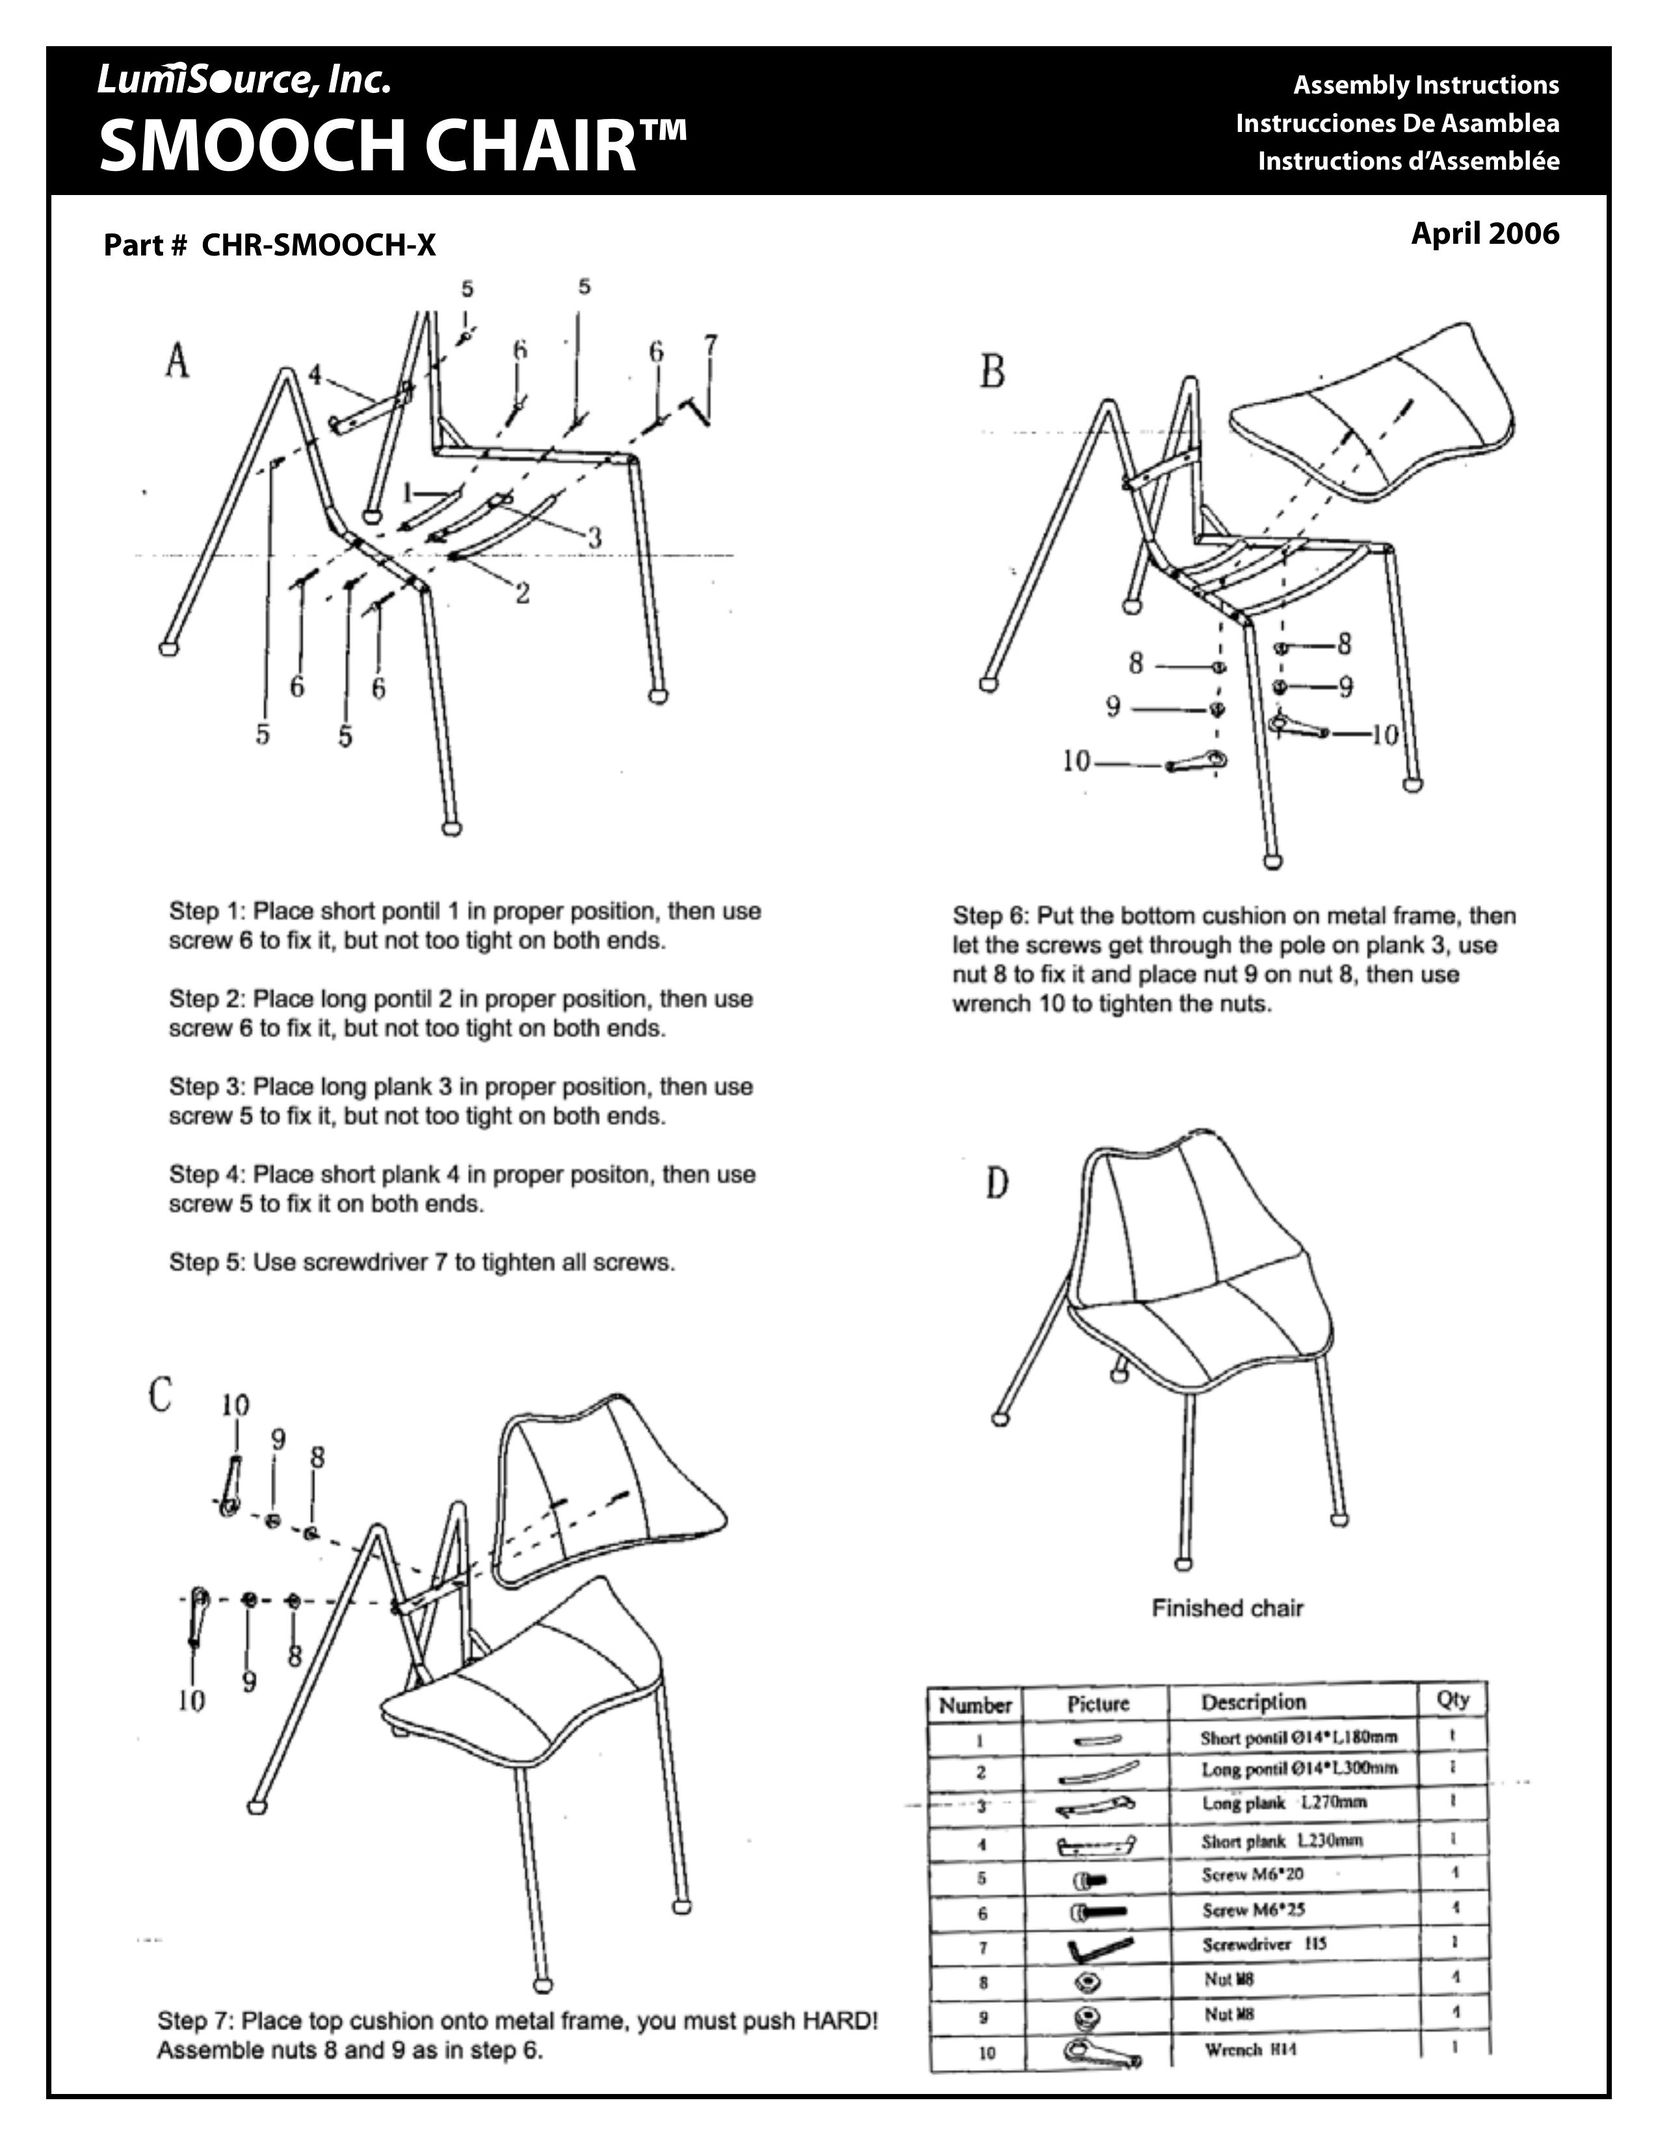 LumiSource CHR-SMOOCH-X High Chair User Manual